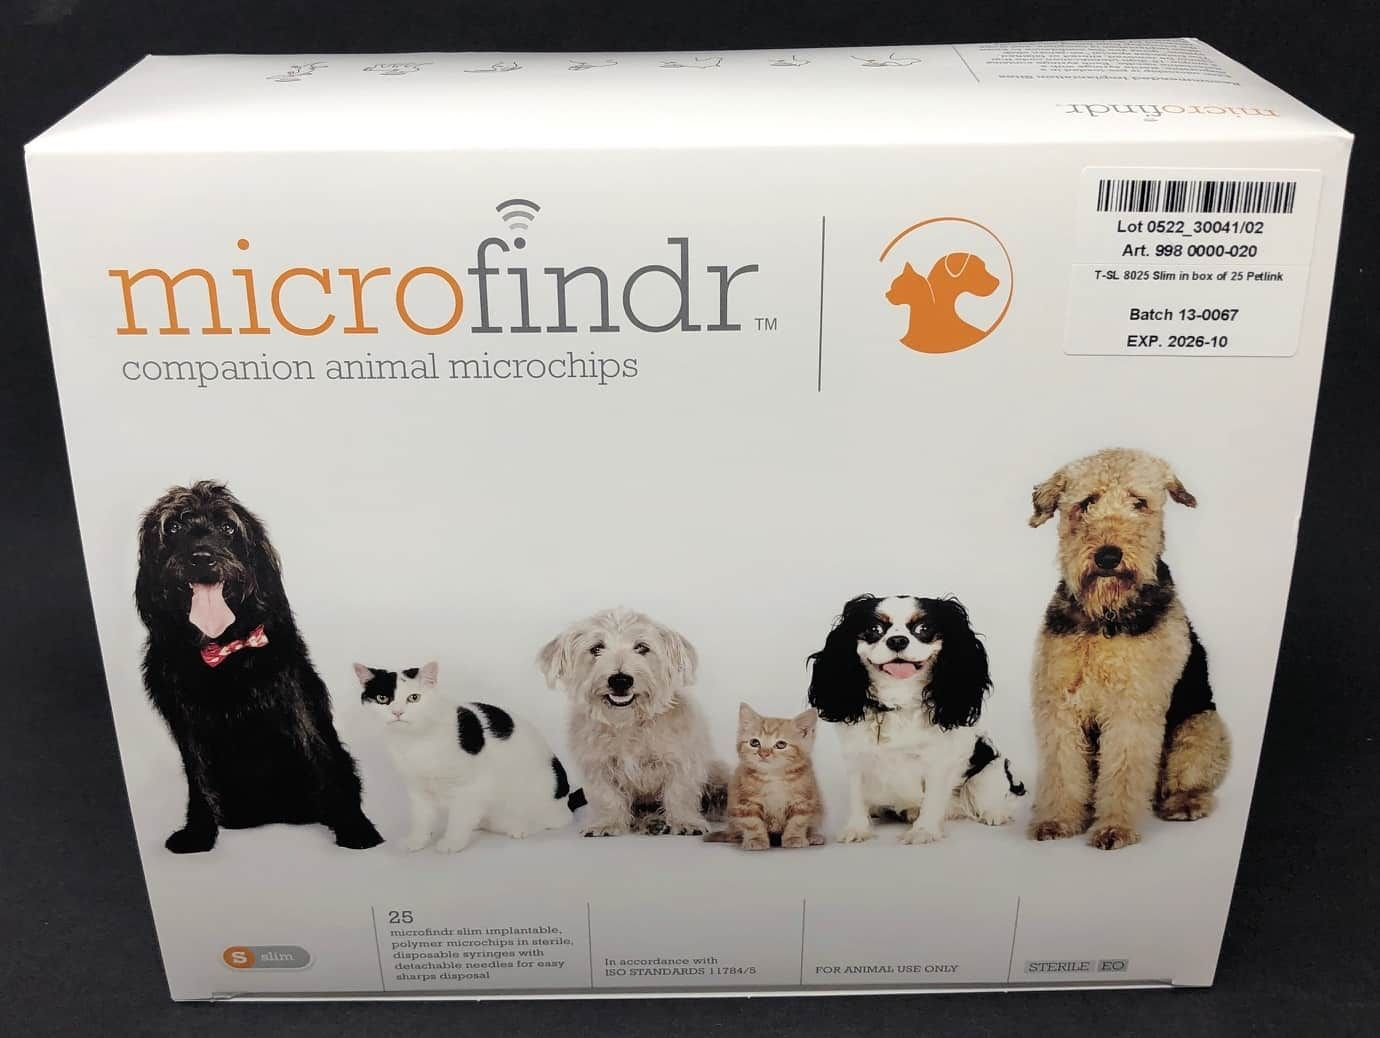 NEW 25-PACK Datamars PetLink Slim Microfindr Pet Microchips for Dog, Cat, Horse, Rabbit, Bird, Primate EXP 2026